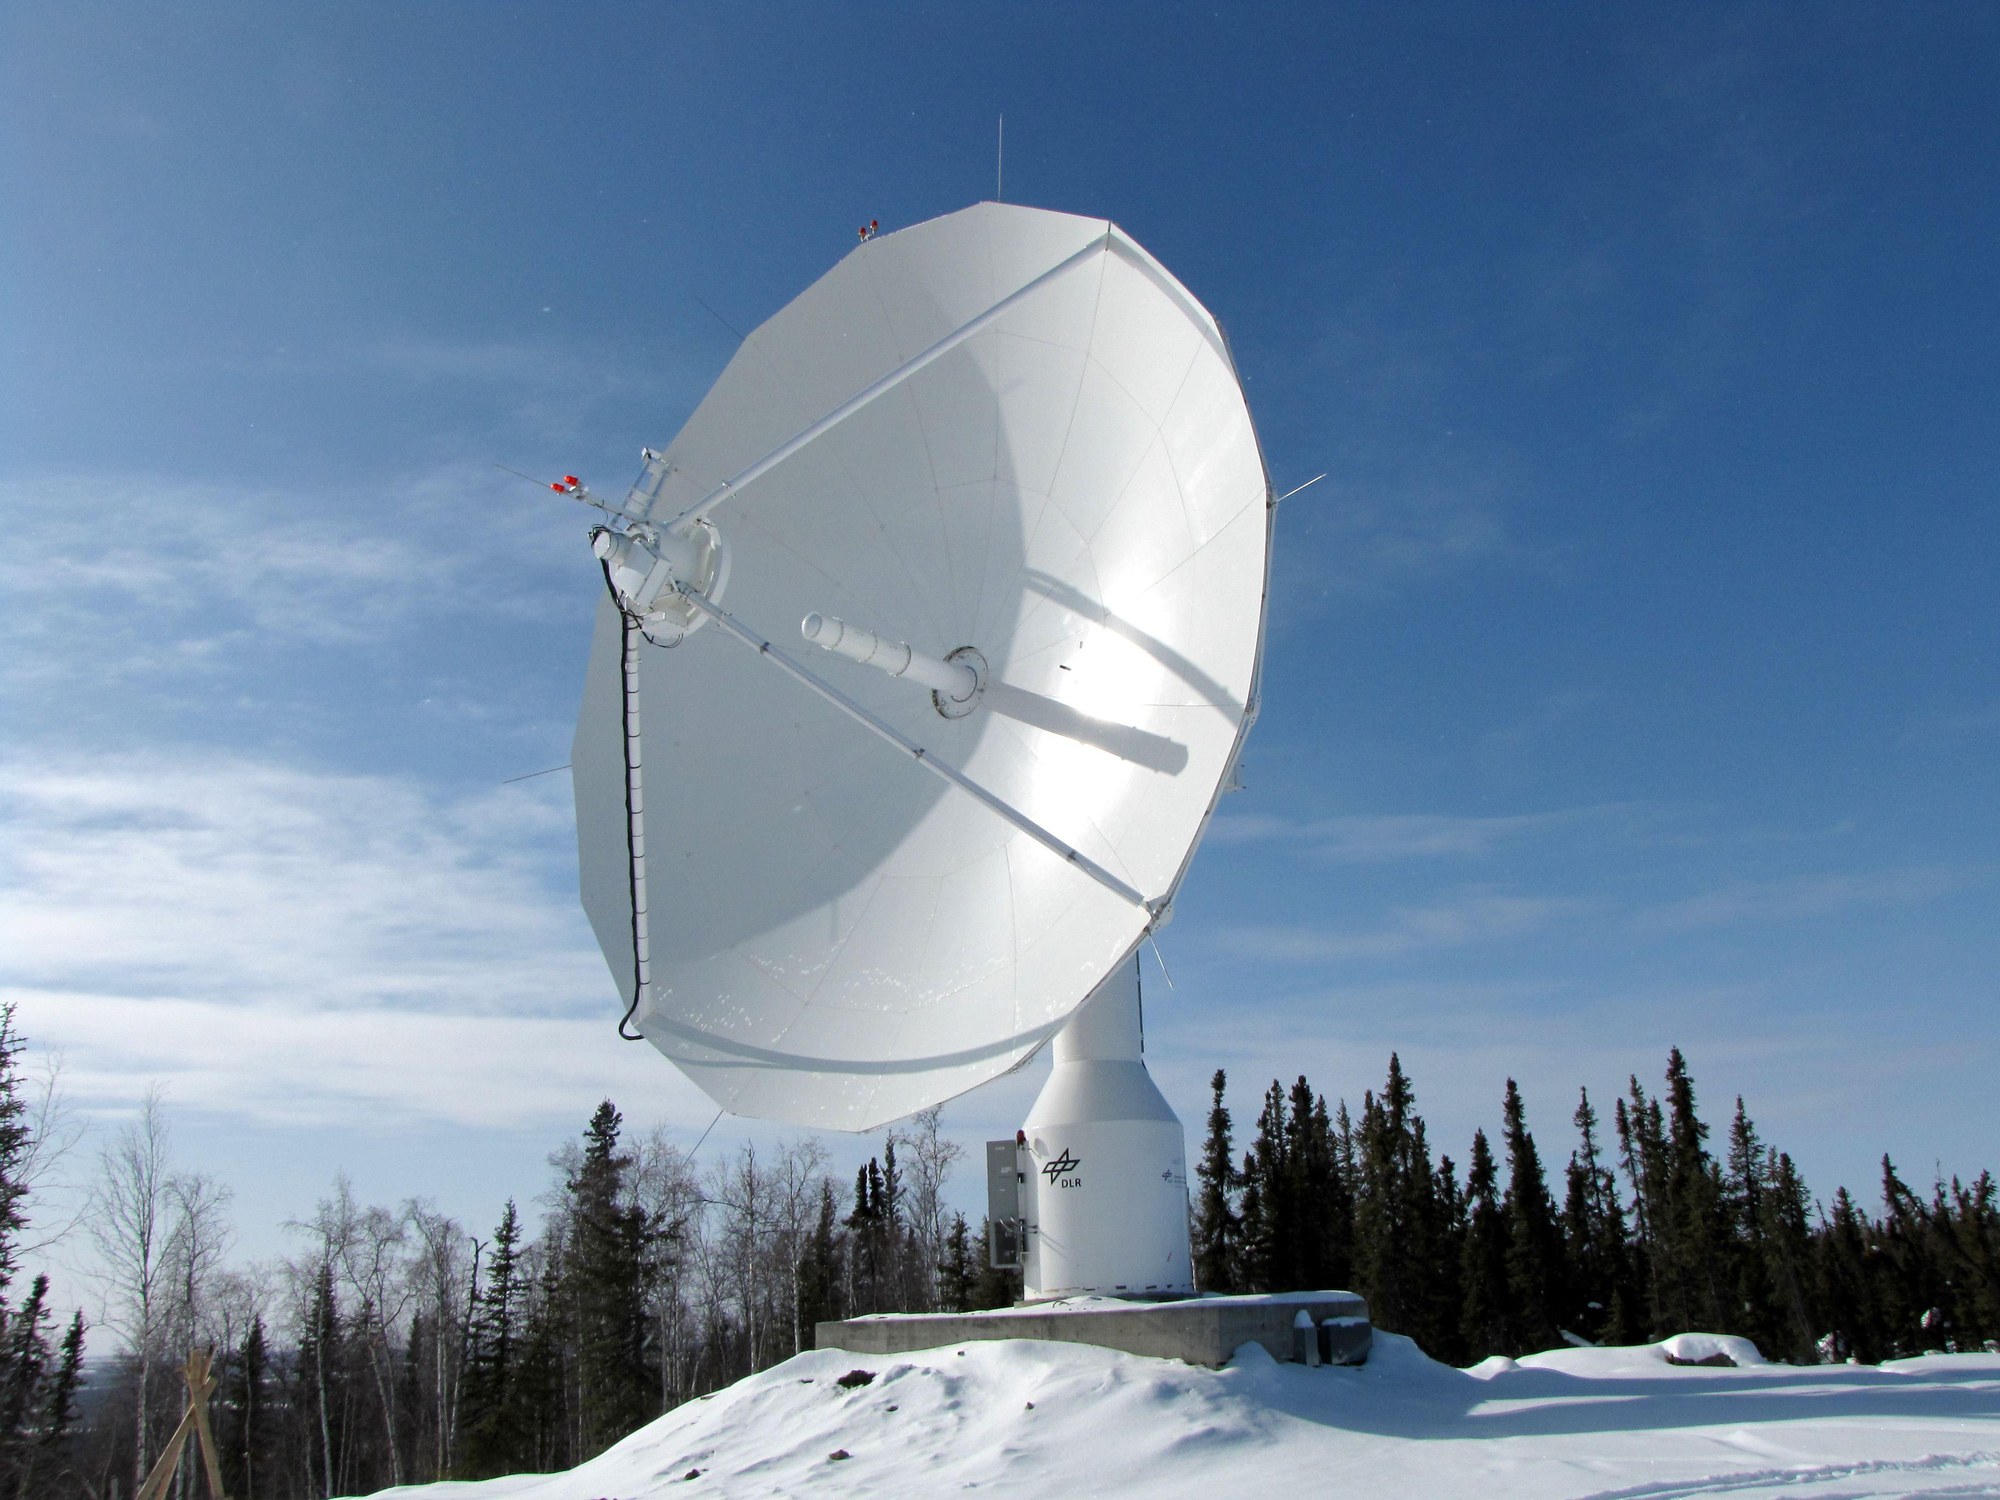 13-Meter-Antenne in Schneelandschaft